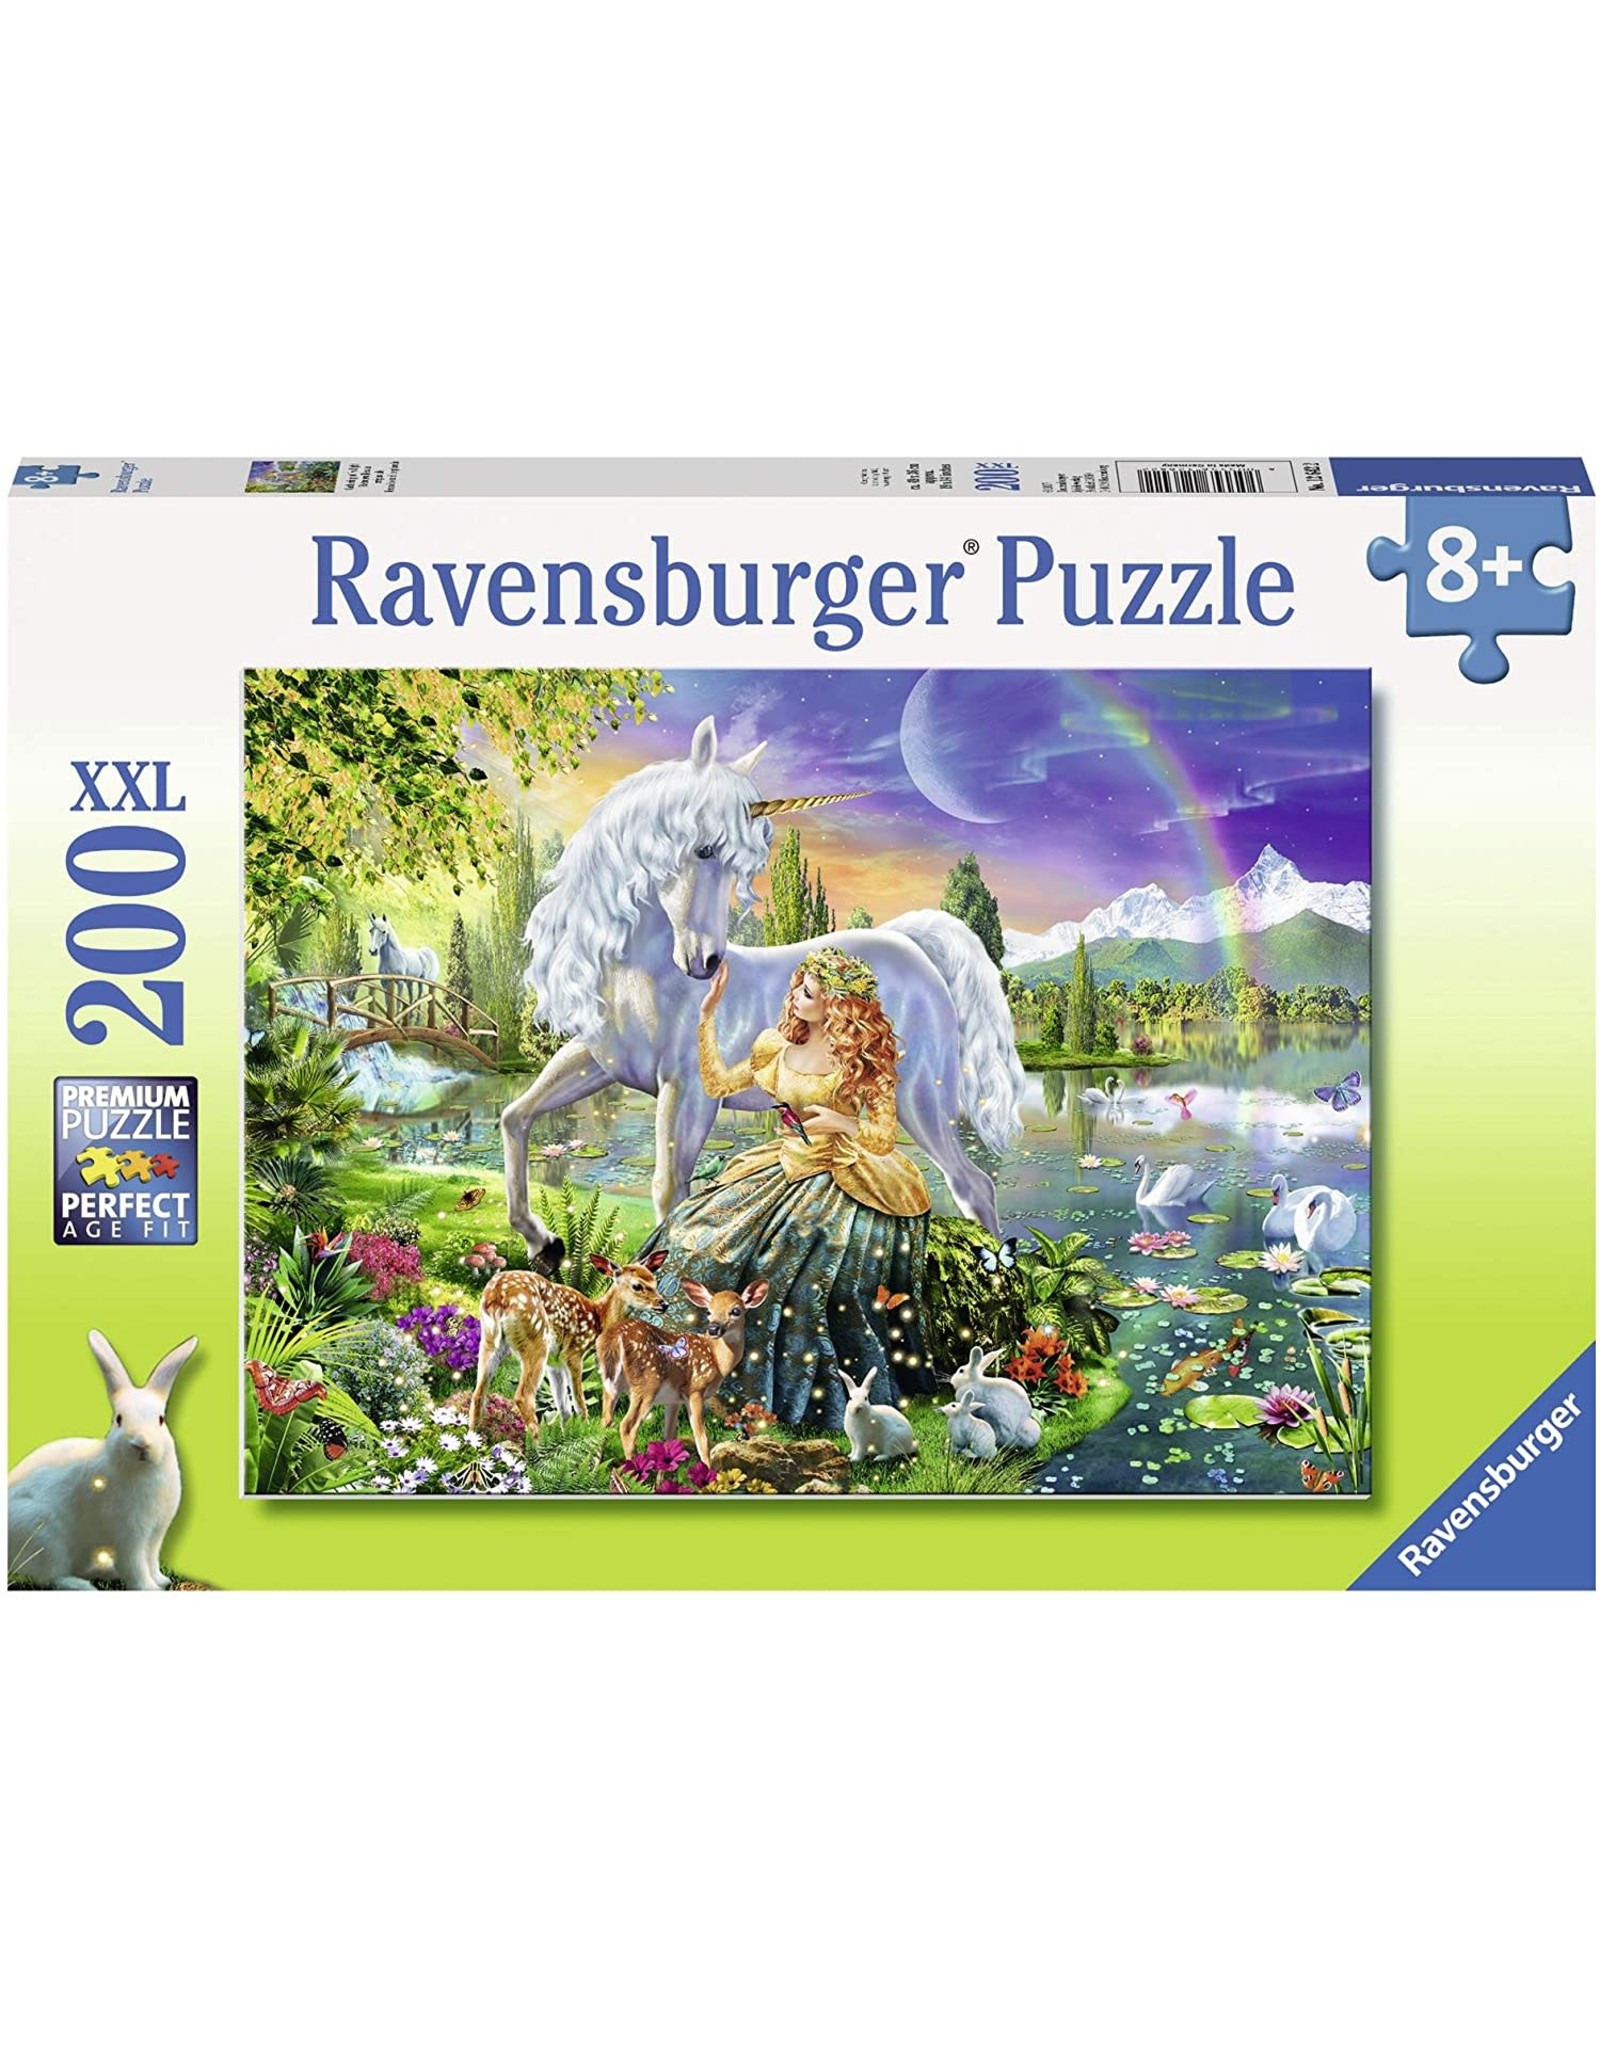 Ravensburger 200 pcs. Gathering at Twilight Puzzle